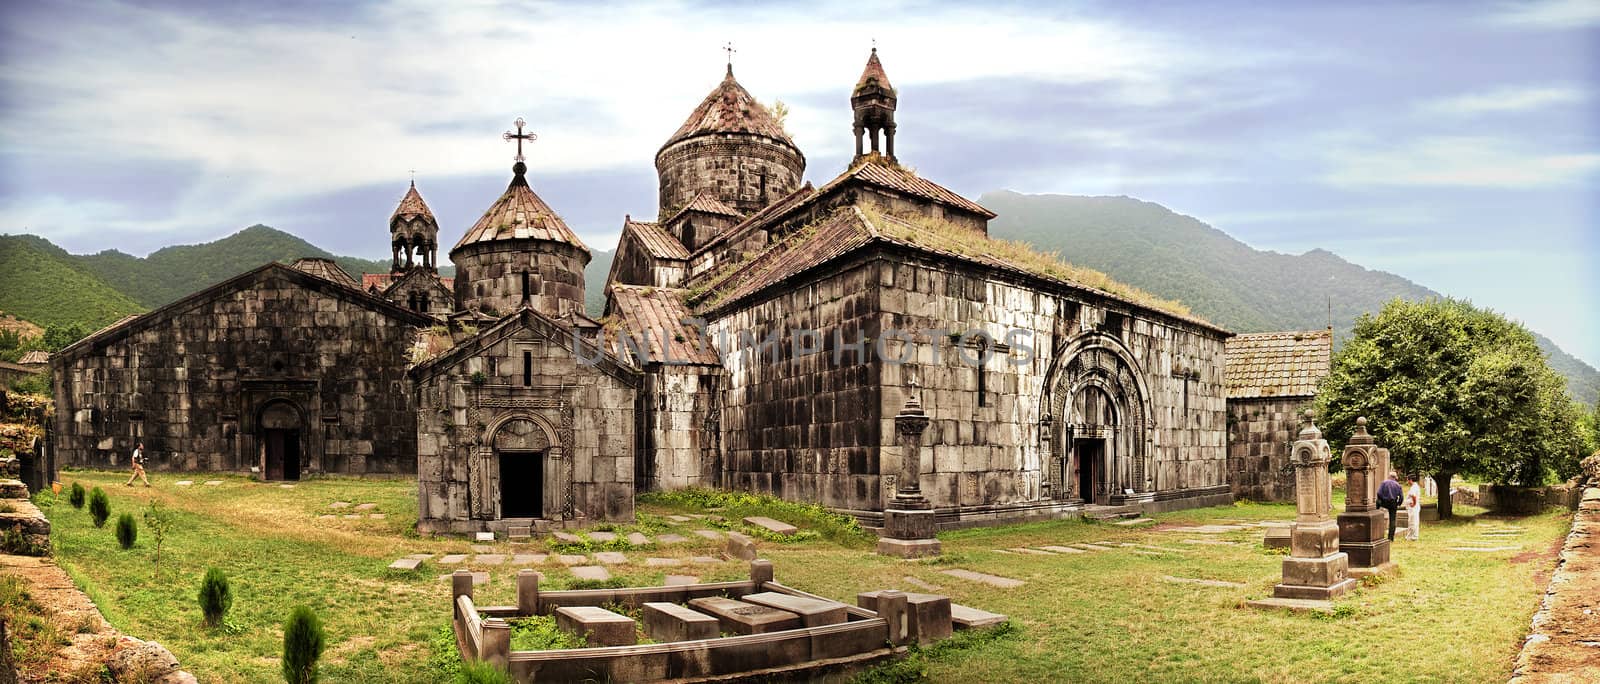 Ancient Christian Monastery / Church in Armenia - Haghpat Monastery